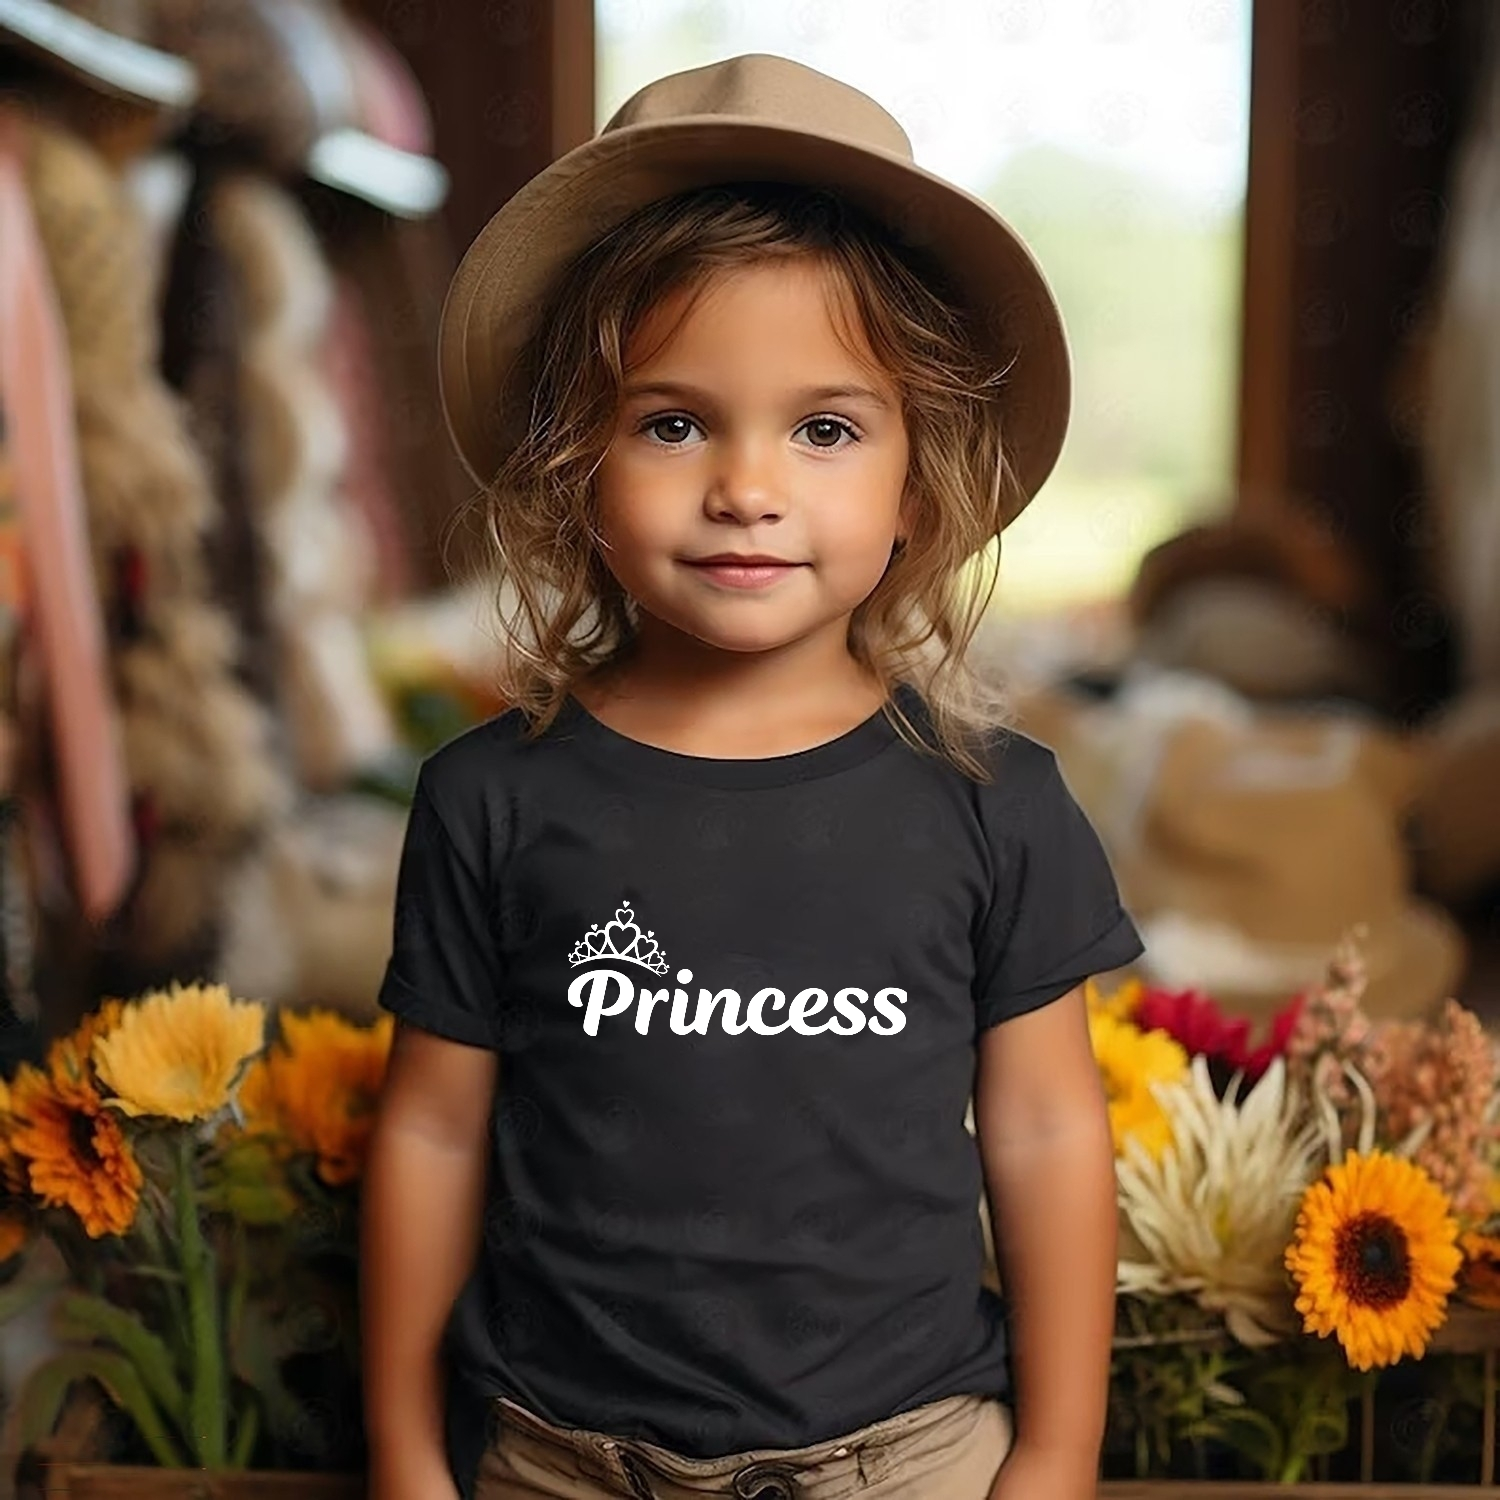 T-shirt corona King-Queen-Prinsss-Prince